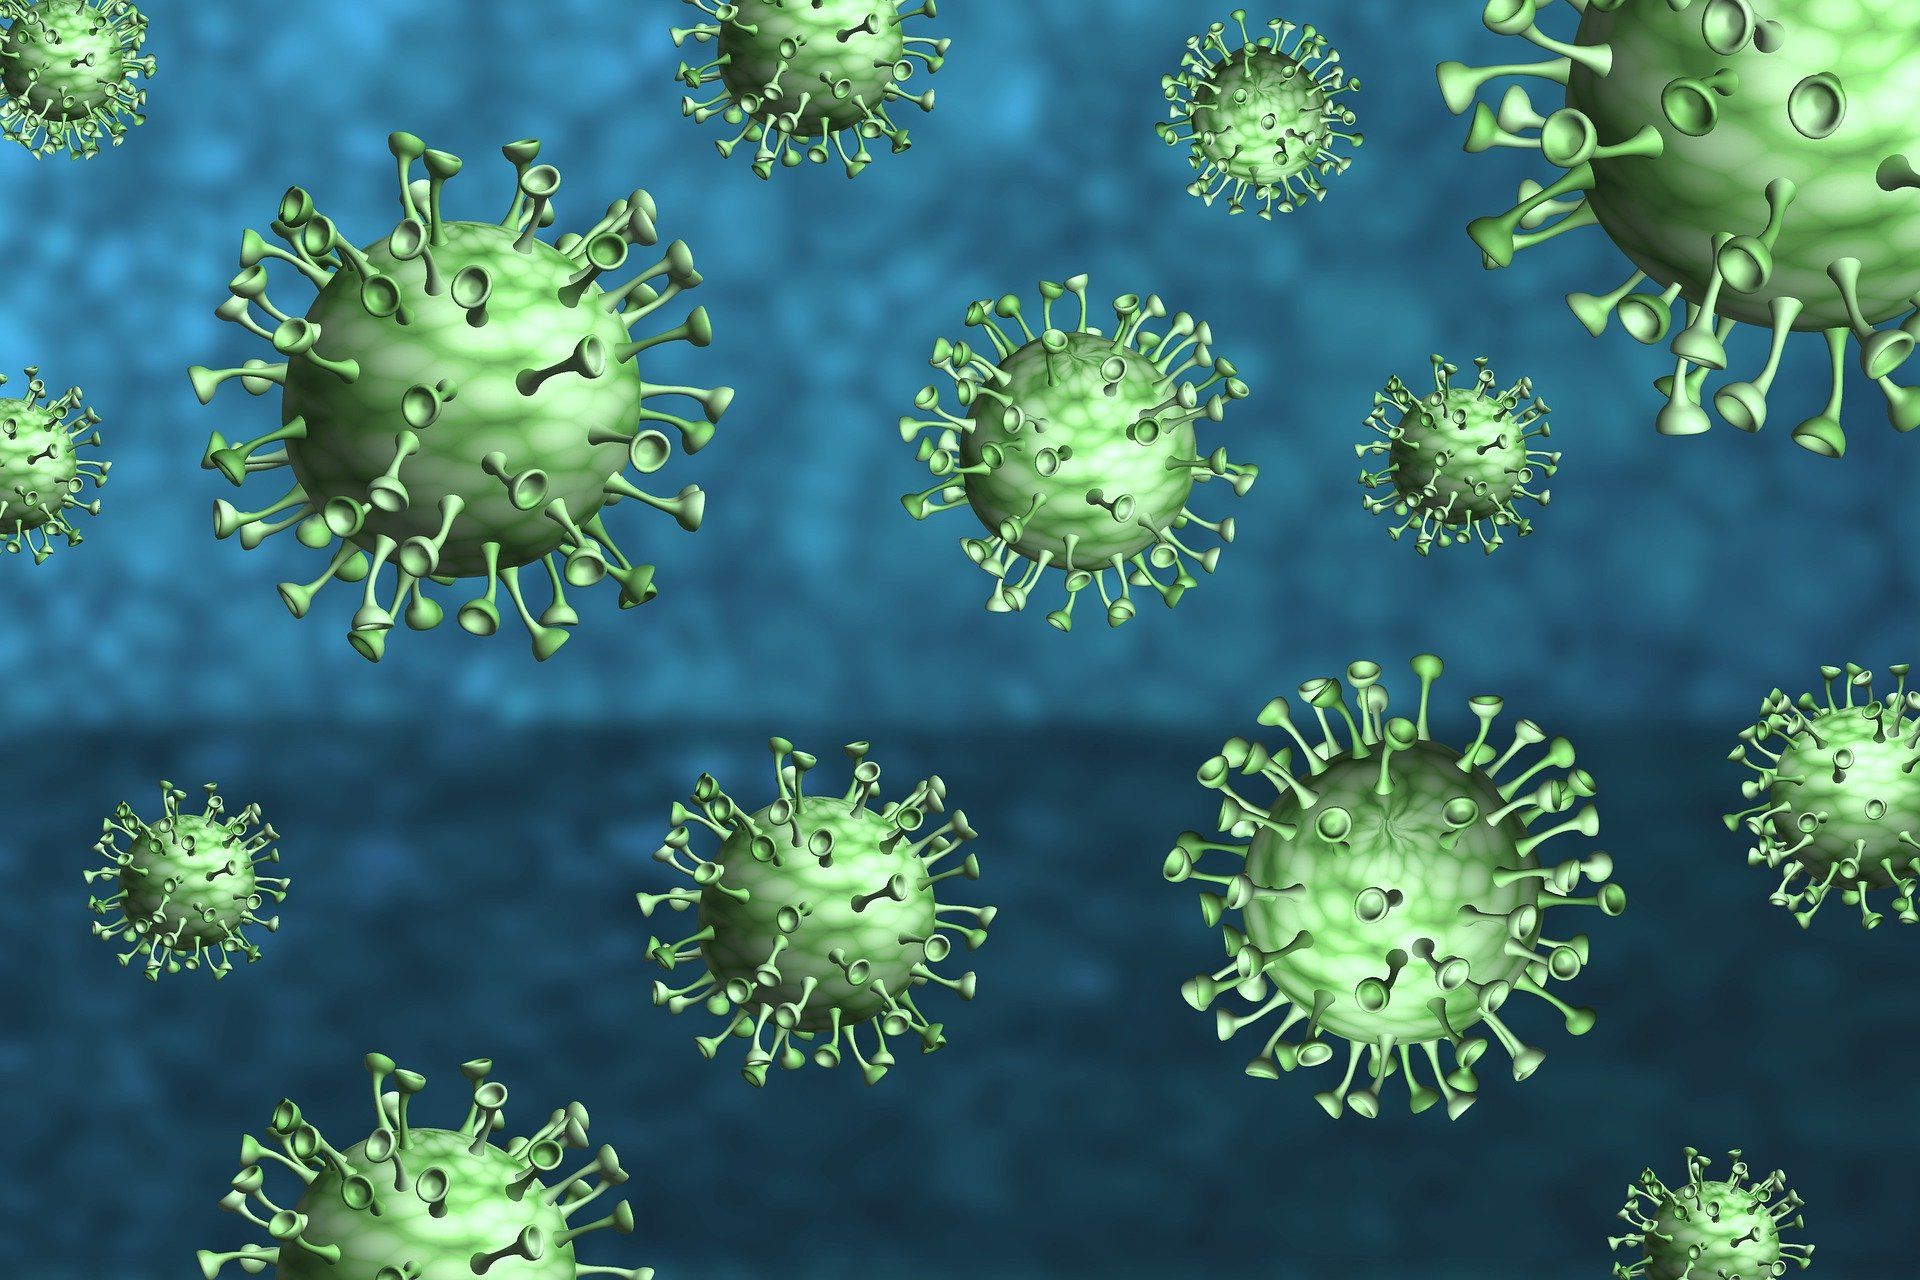 Www virus. Ковид coronavirus. Вирус вирус коронавирус. Вирус ковид 19. Короновирусная инфекция штаммы.